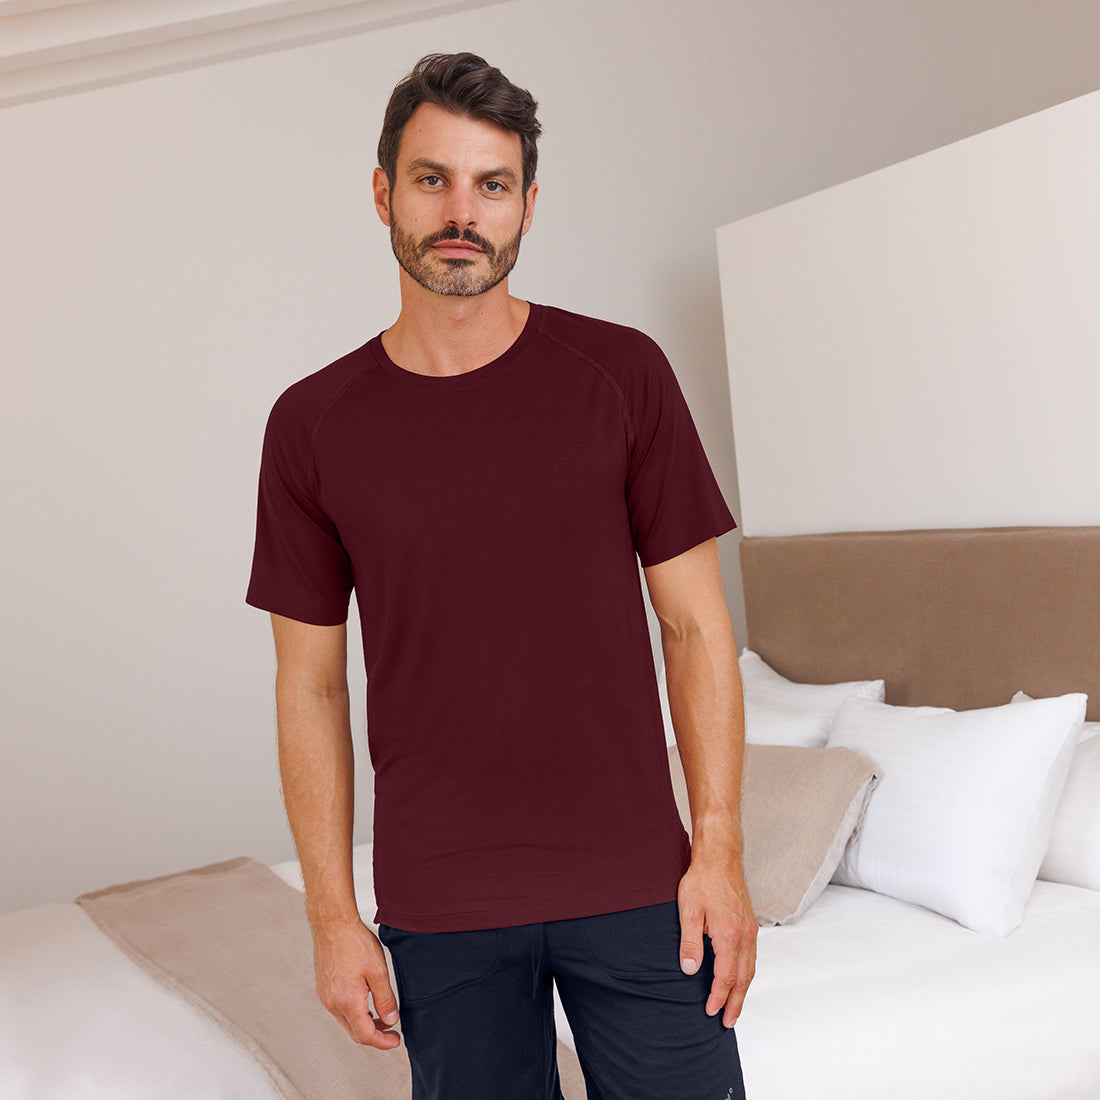 Muscle recovery sleep t-shirt men || Burgundy